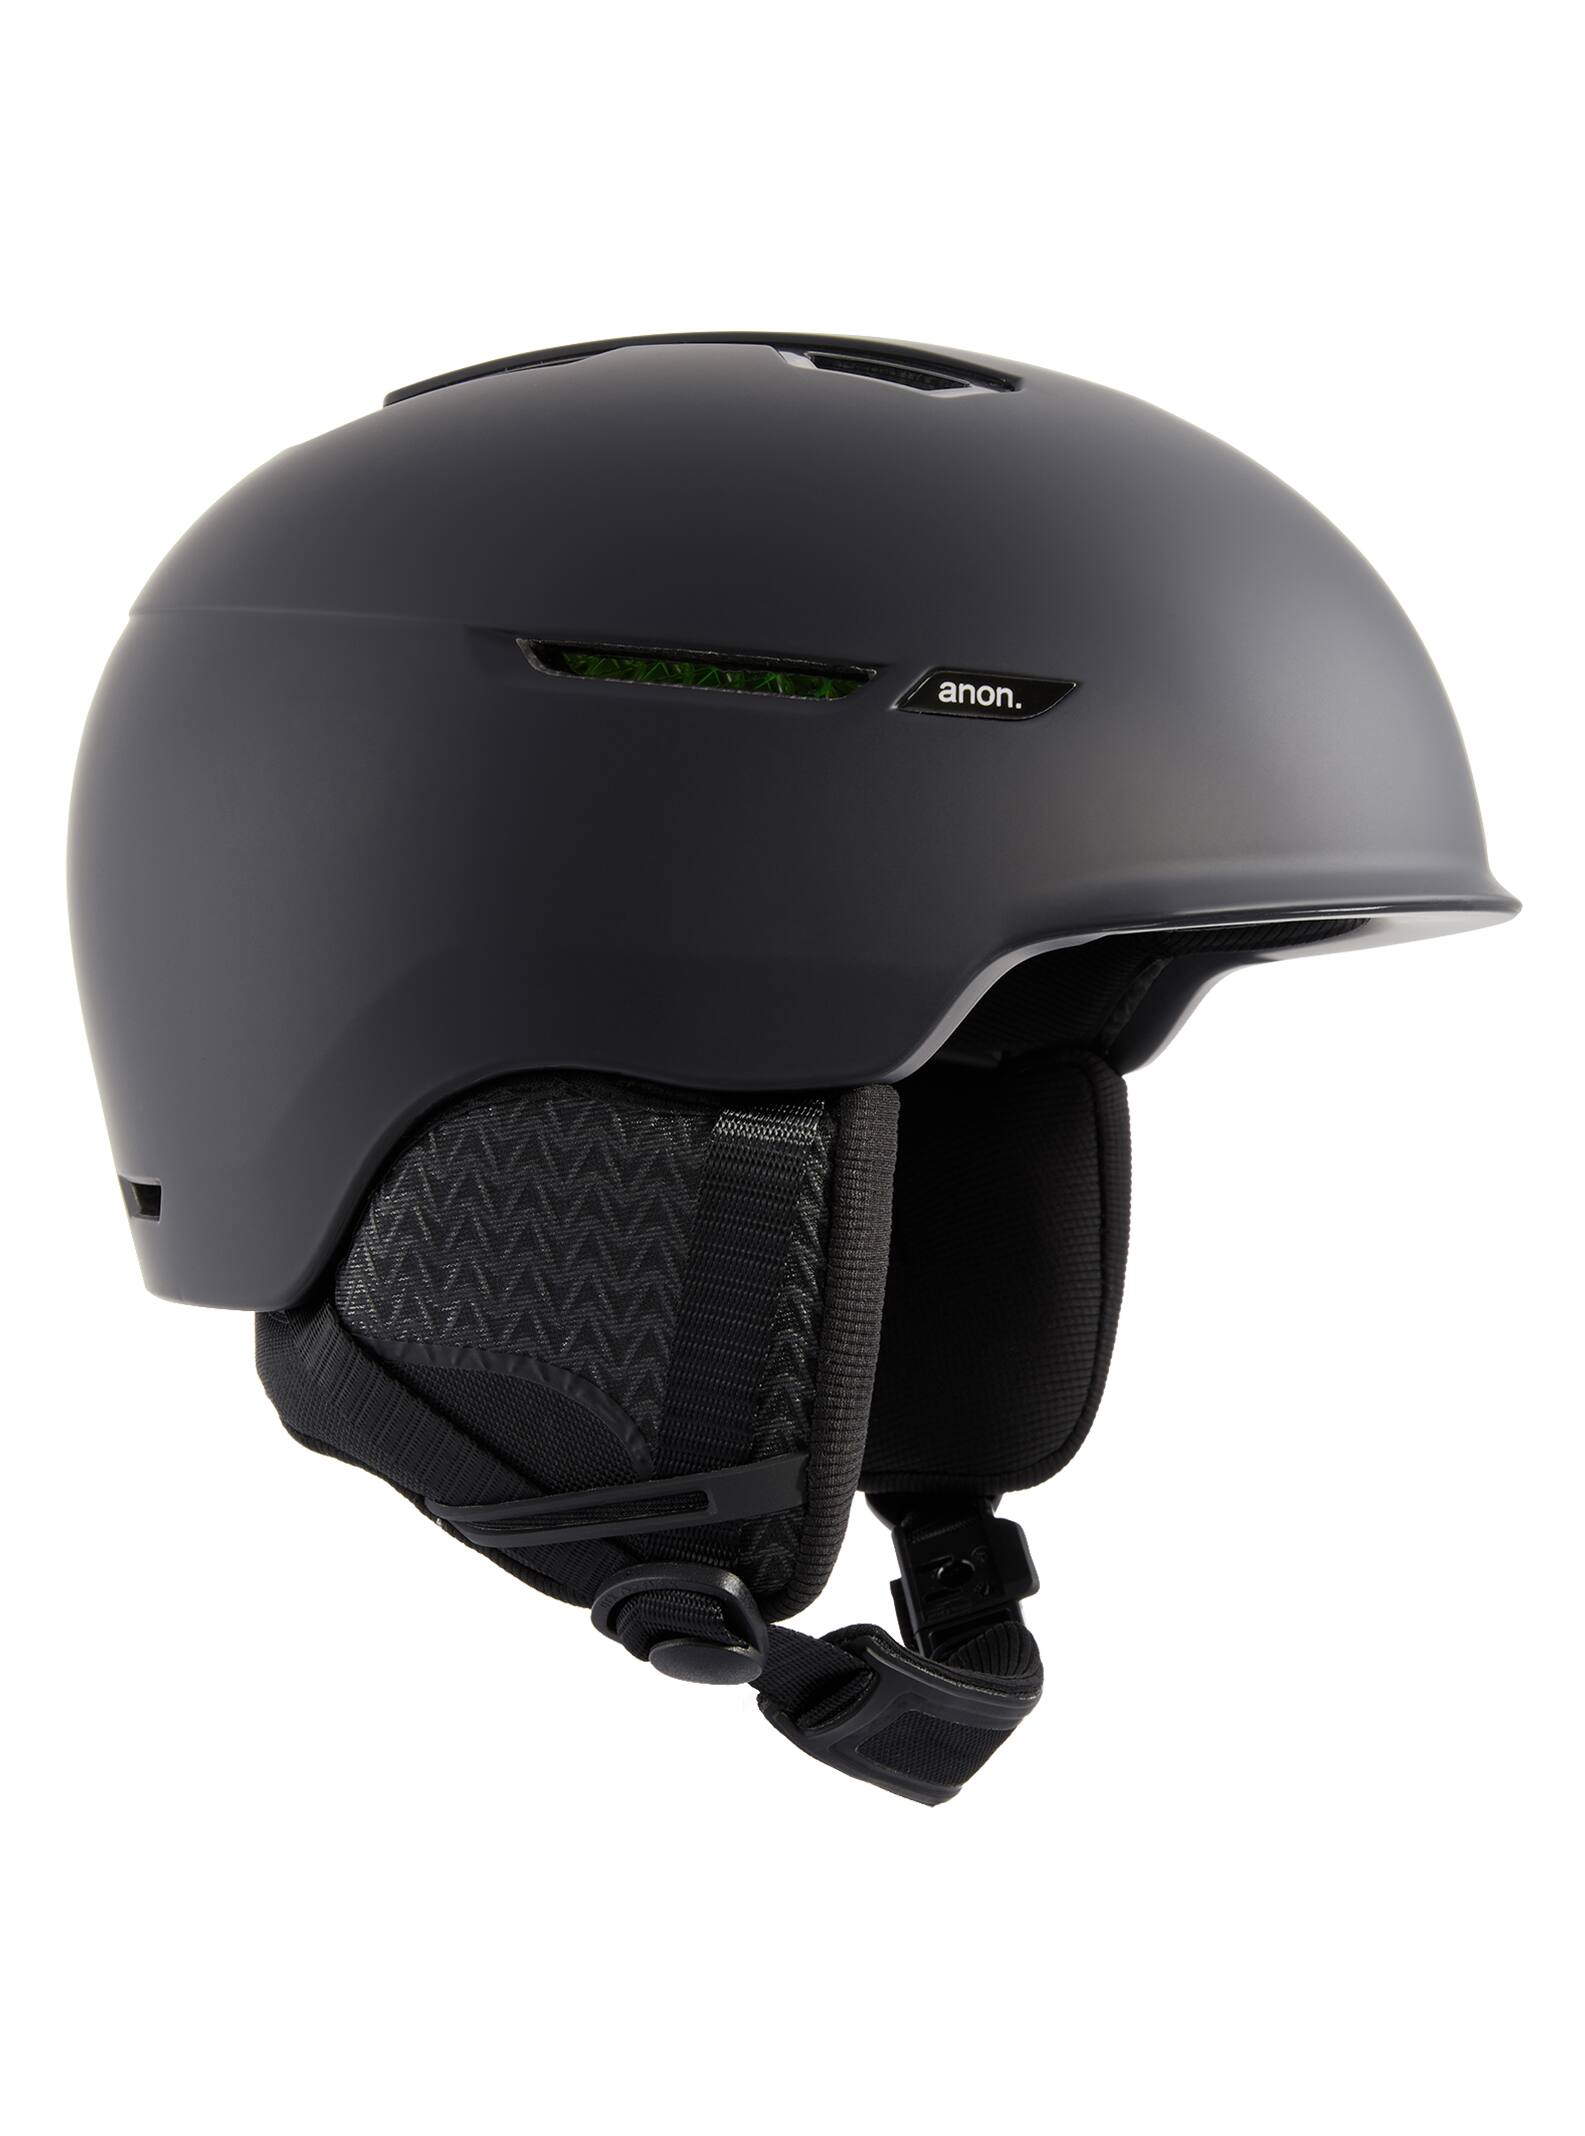 NESSKIN Ski Helmet Integrally-Molded Snowboard Helmet for Adult and Youth Detachable Ski Goggles 